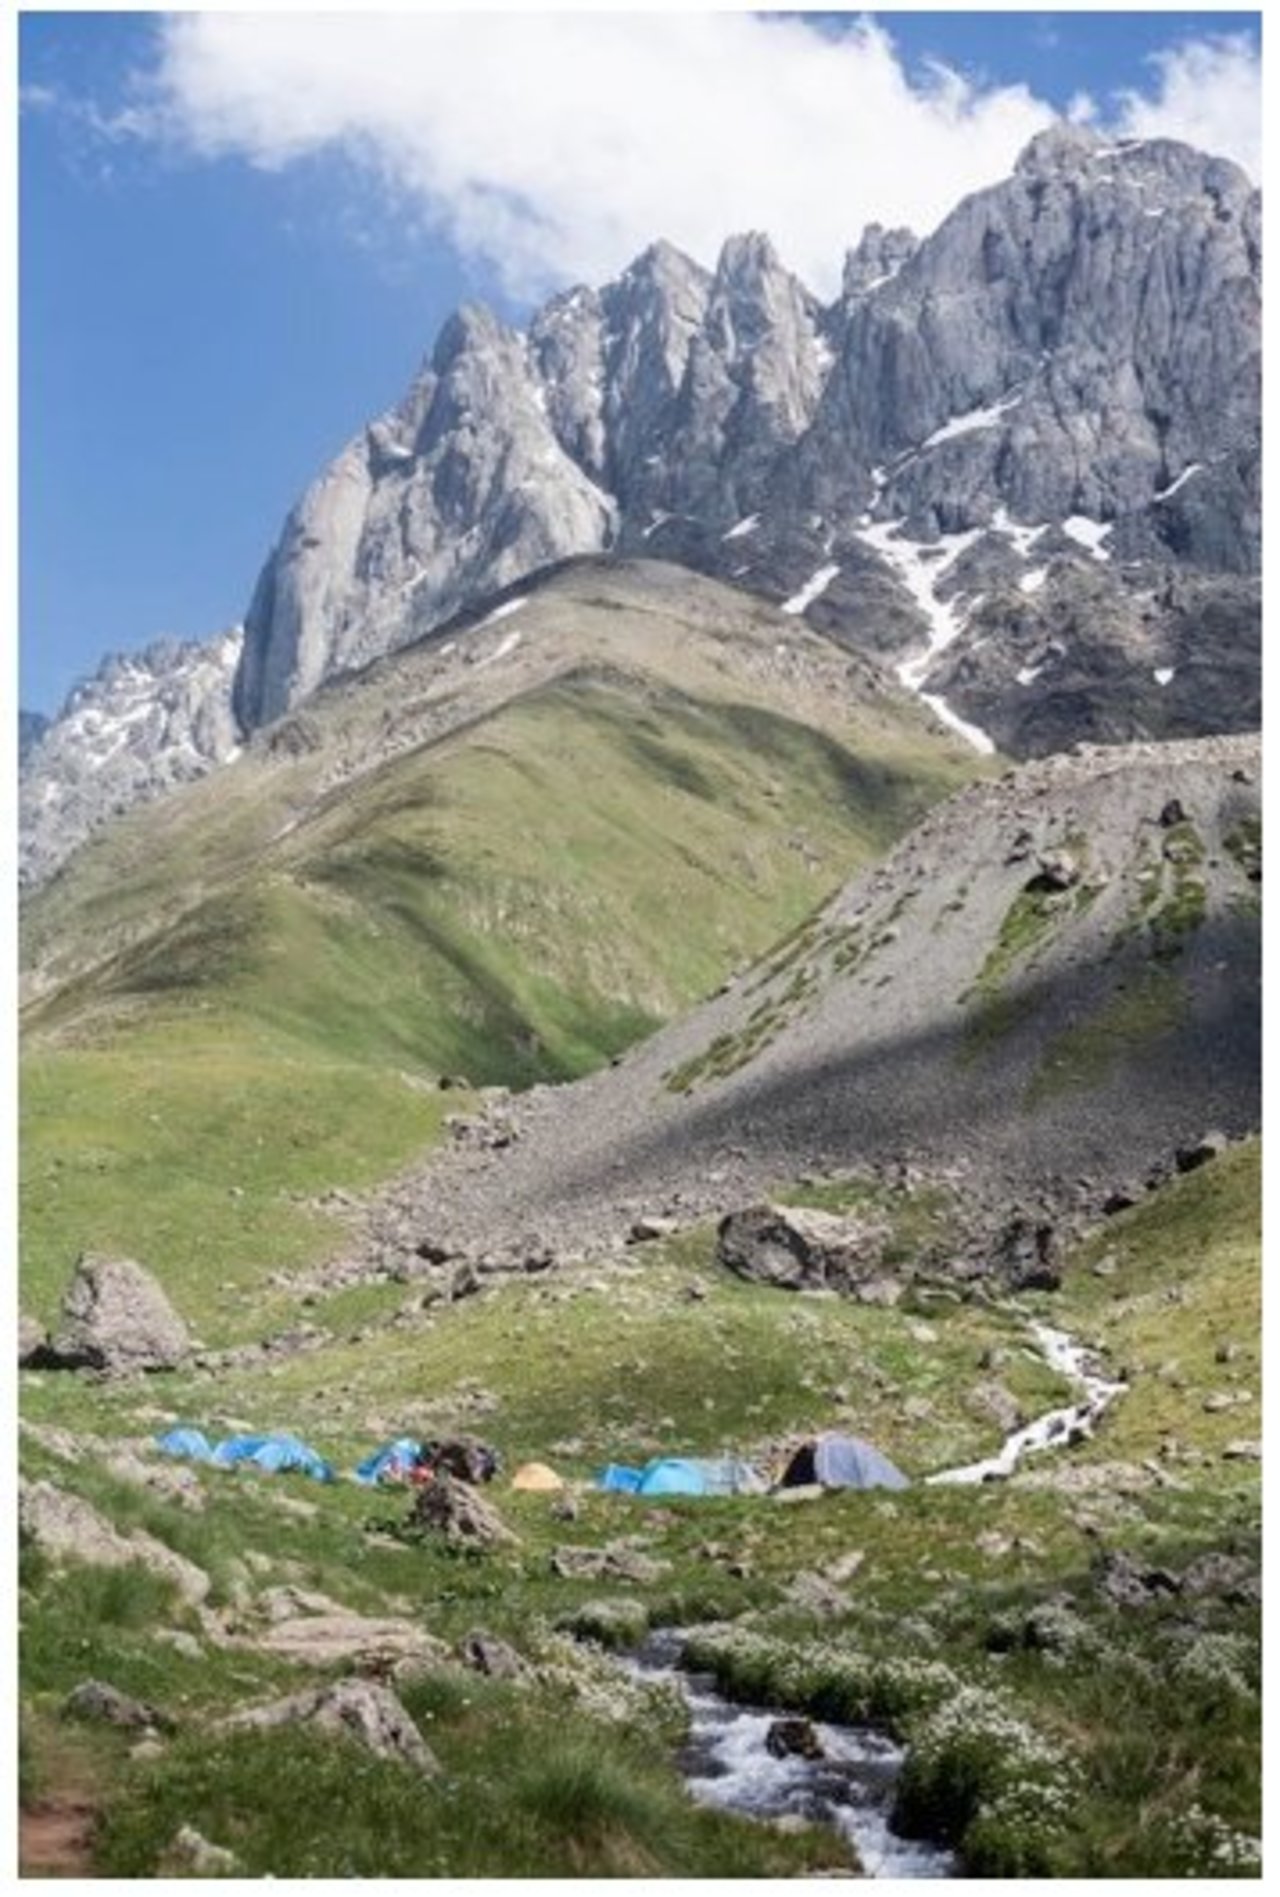 Along the stunning Transcaucasian Trail:http://greenadventurestravel.com/gallery/april-2016.html#Hiking #Adventure #bucketlist https://t.co/NJLCuueFea